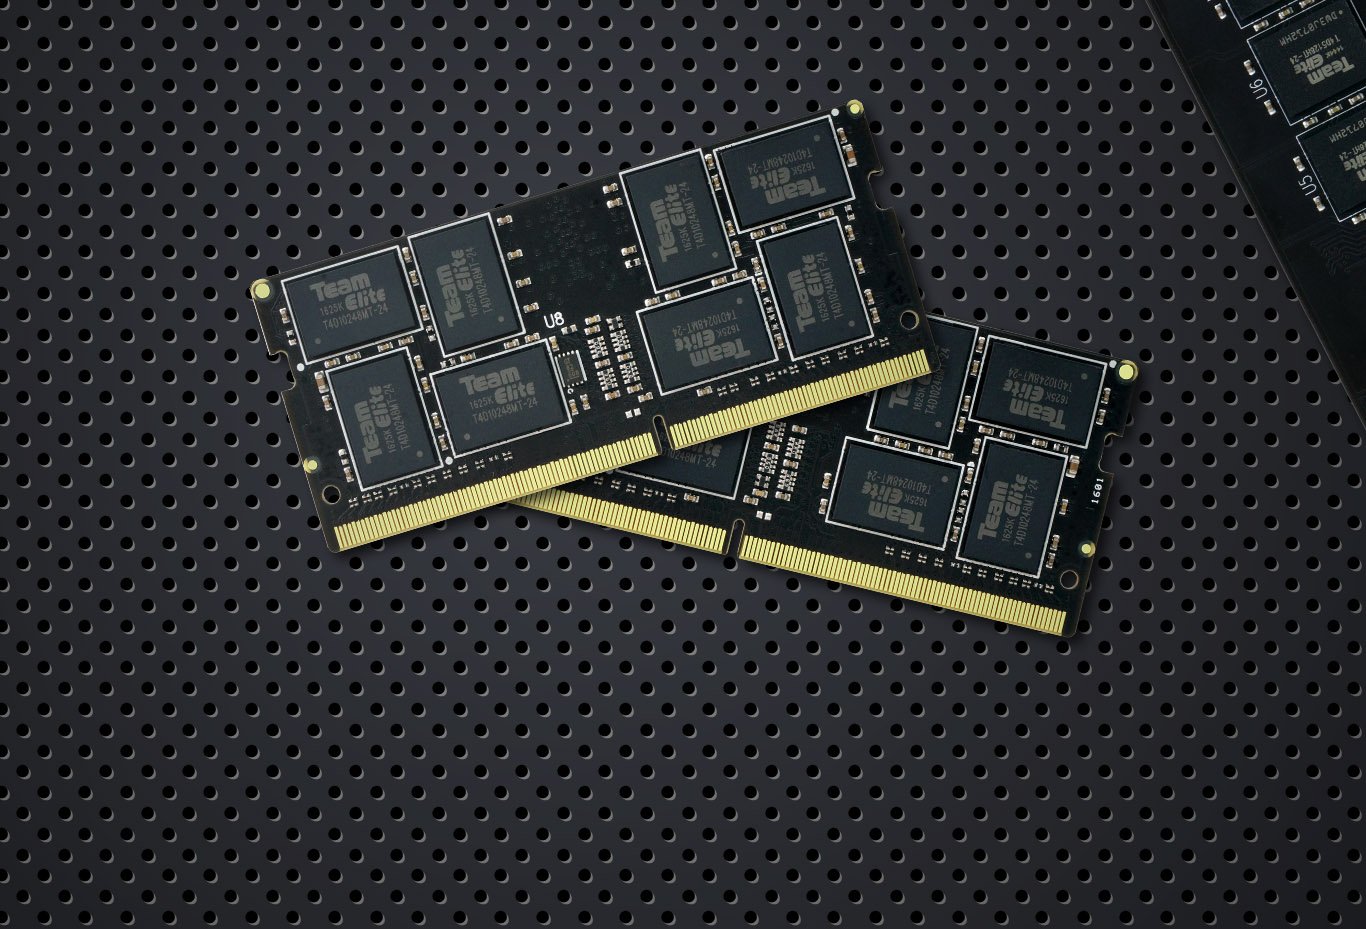 Team Elite 16GB (2 x 8GB) 260-Pin DDR4 SO-DIMM DDR4 3200 (PC4 25600) Laptop  Memory Model TED416G3200C22DC-S01 